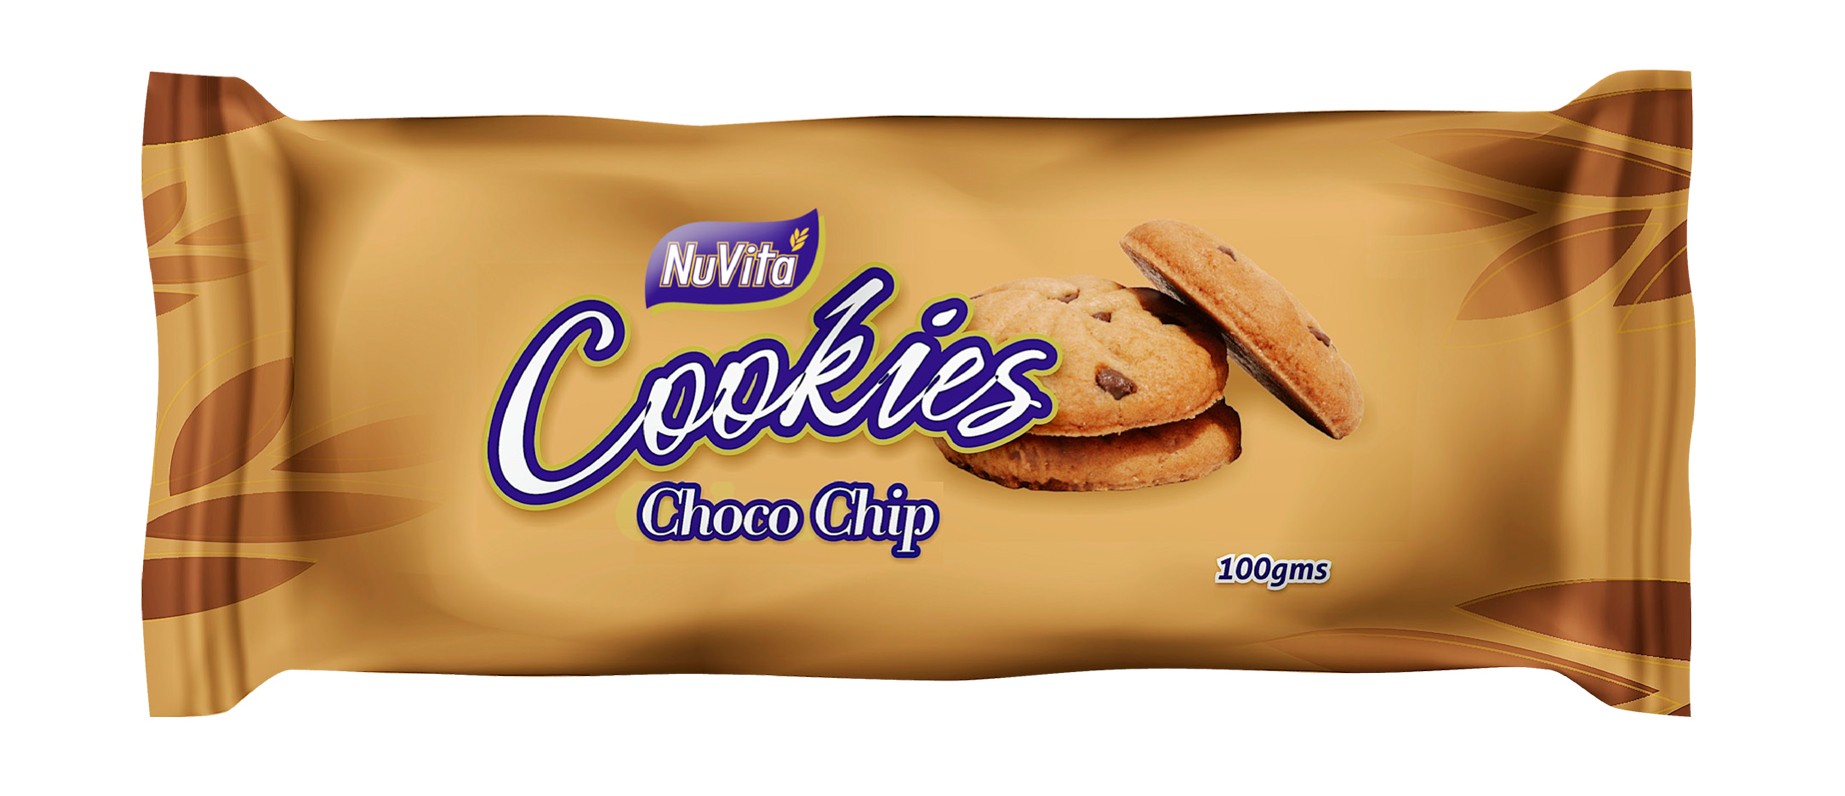 NuVita Cookies